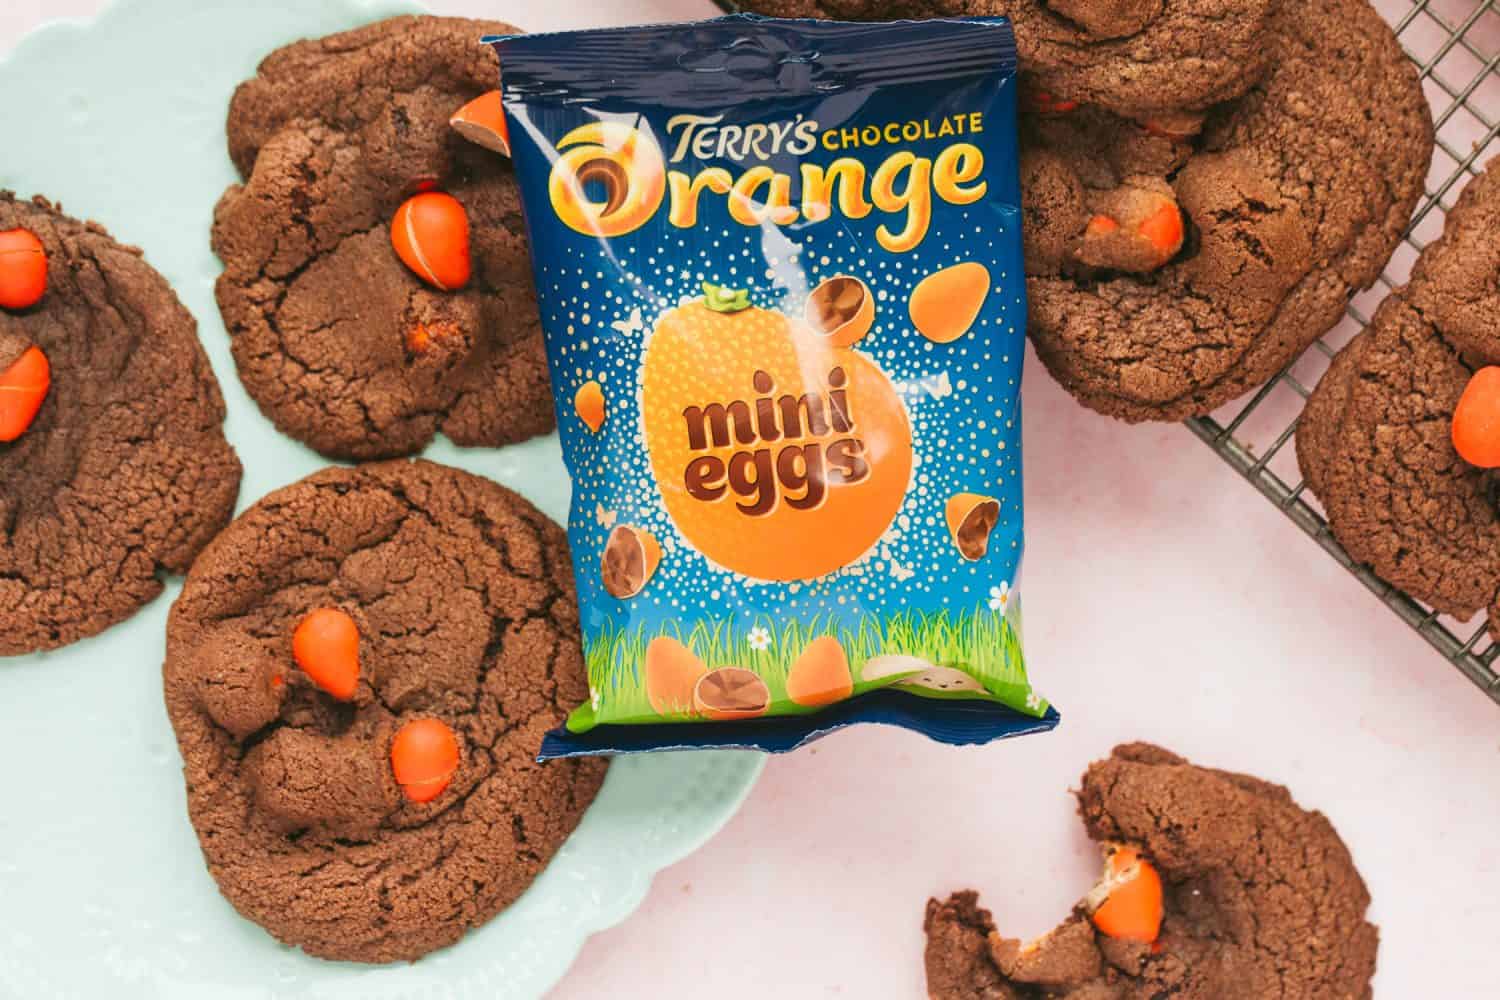 Chocolate cookies with Terry's choc orange eggs. 